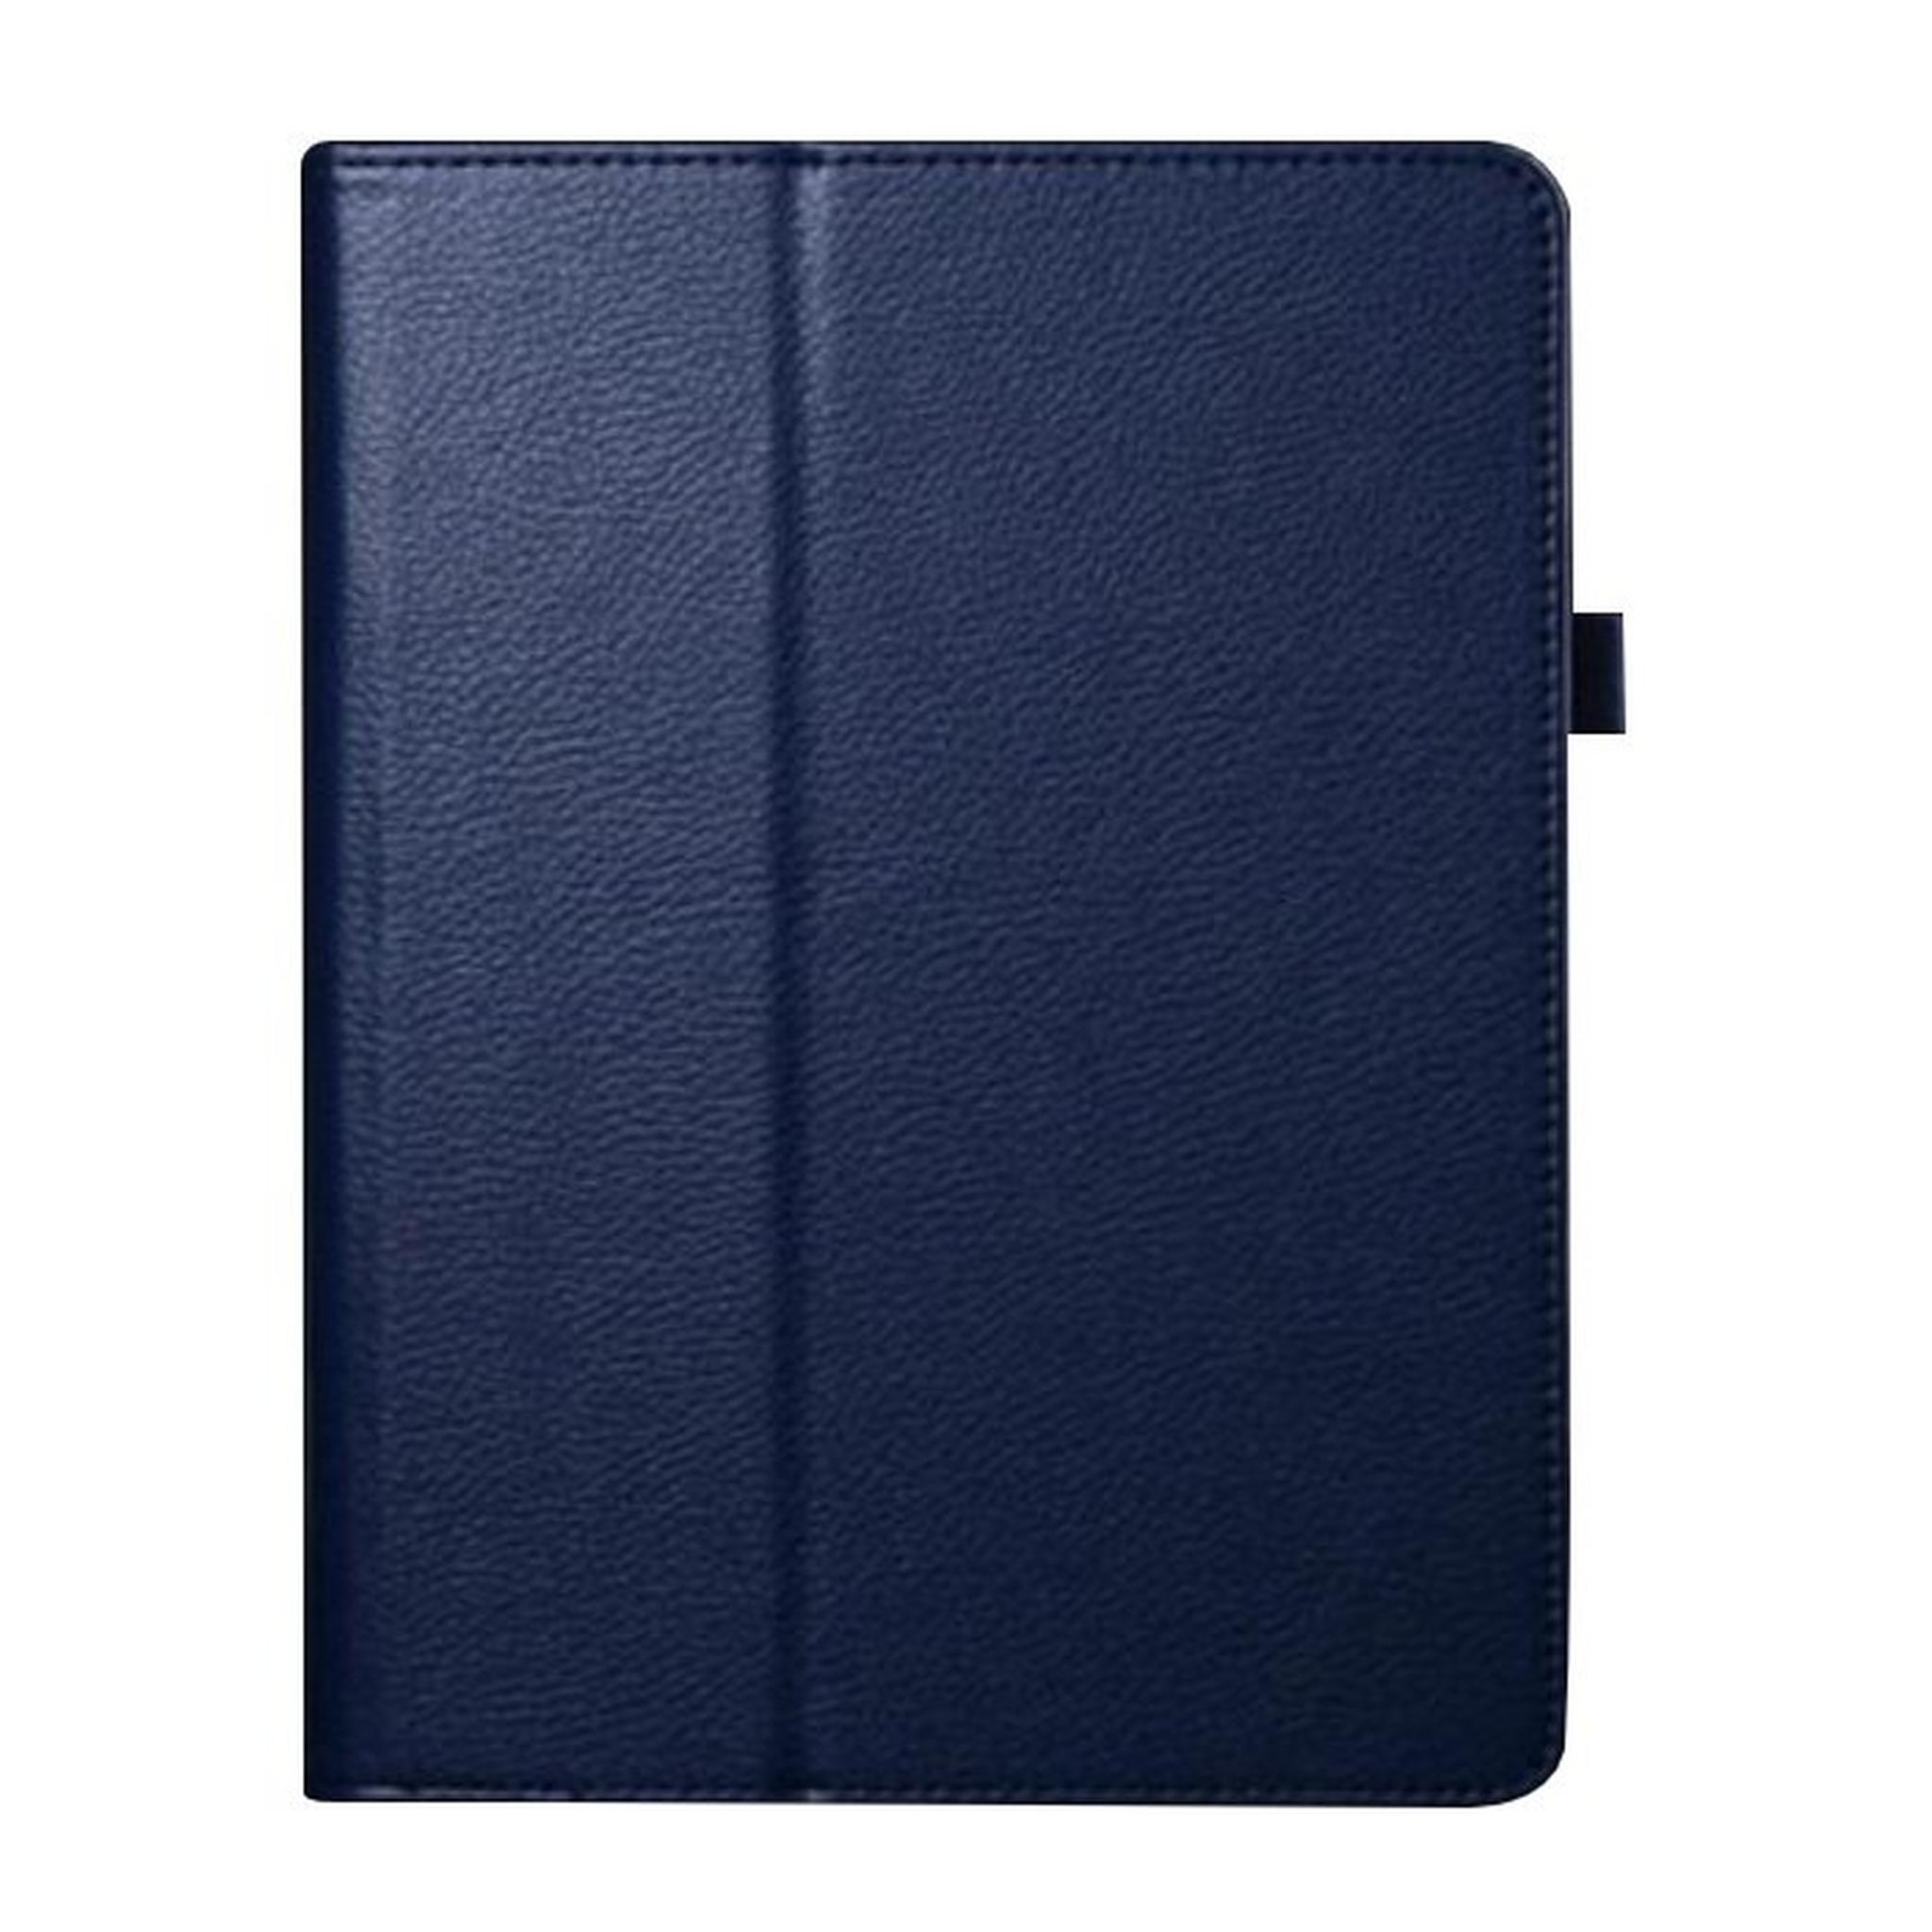 EQ Book Folio 7-inch Tablet Case - Navy